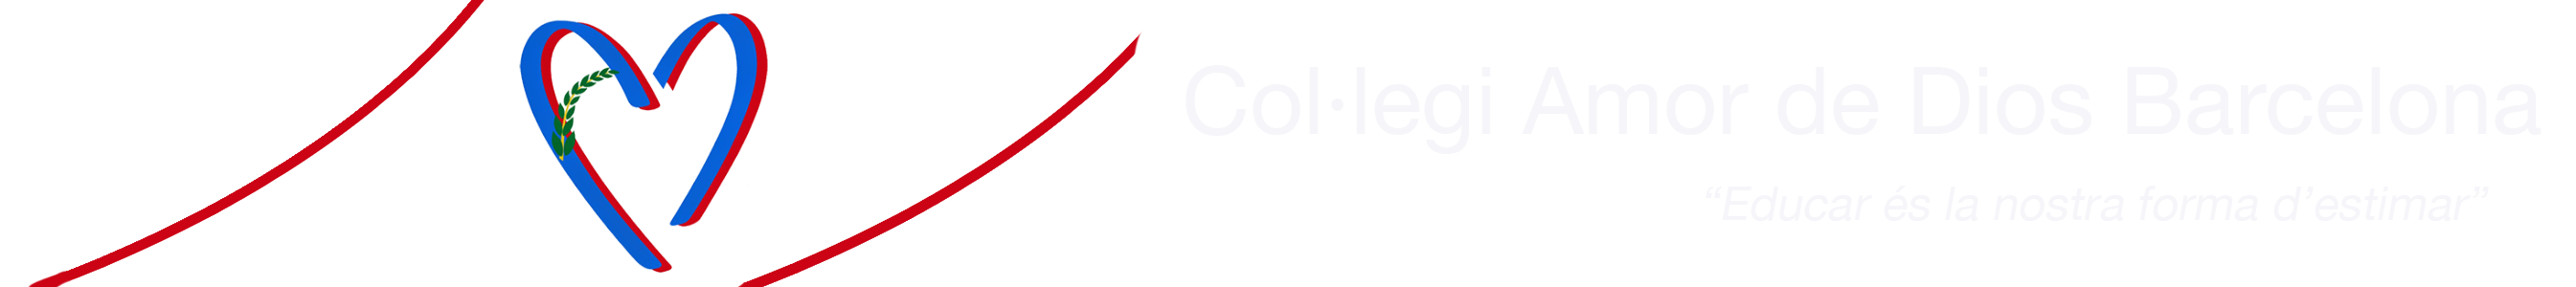 Logo Col·legi Amor de Dios